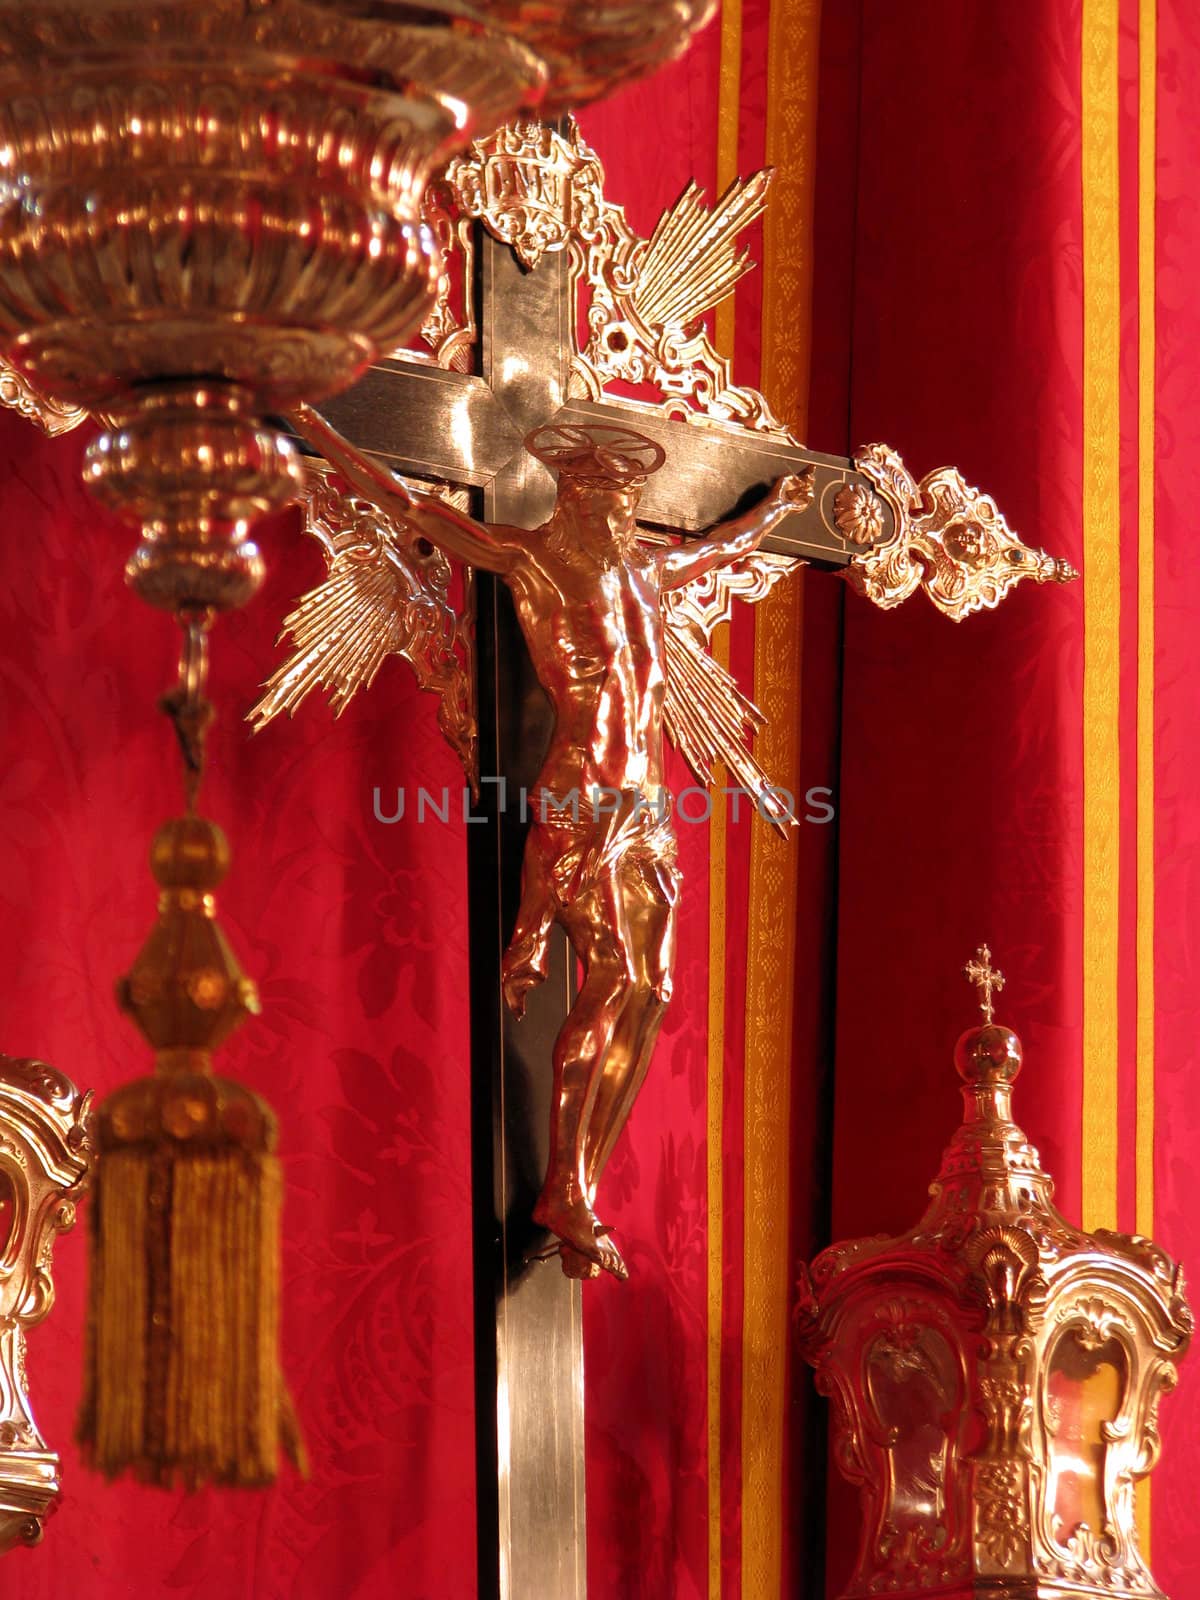 The Processional Cross by fajjenzu